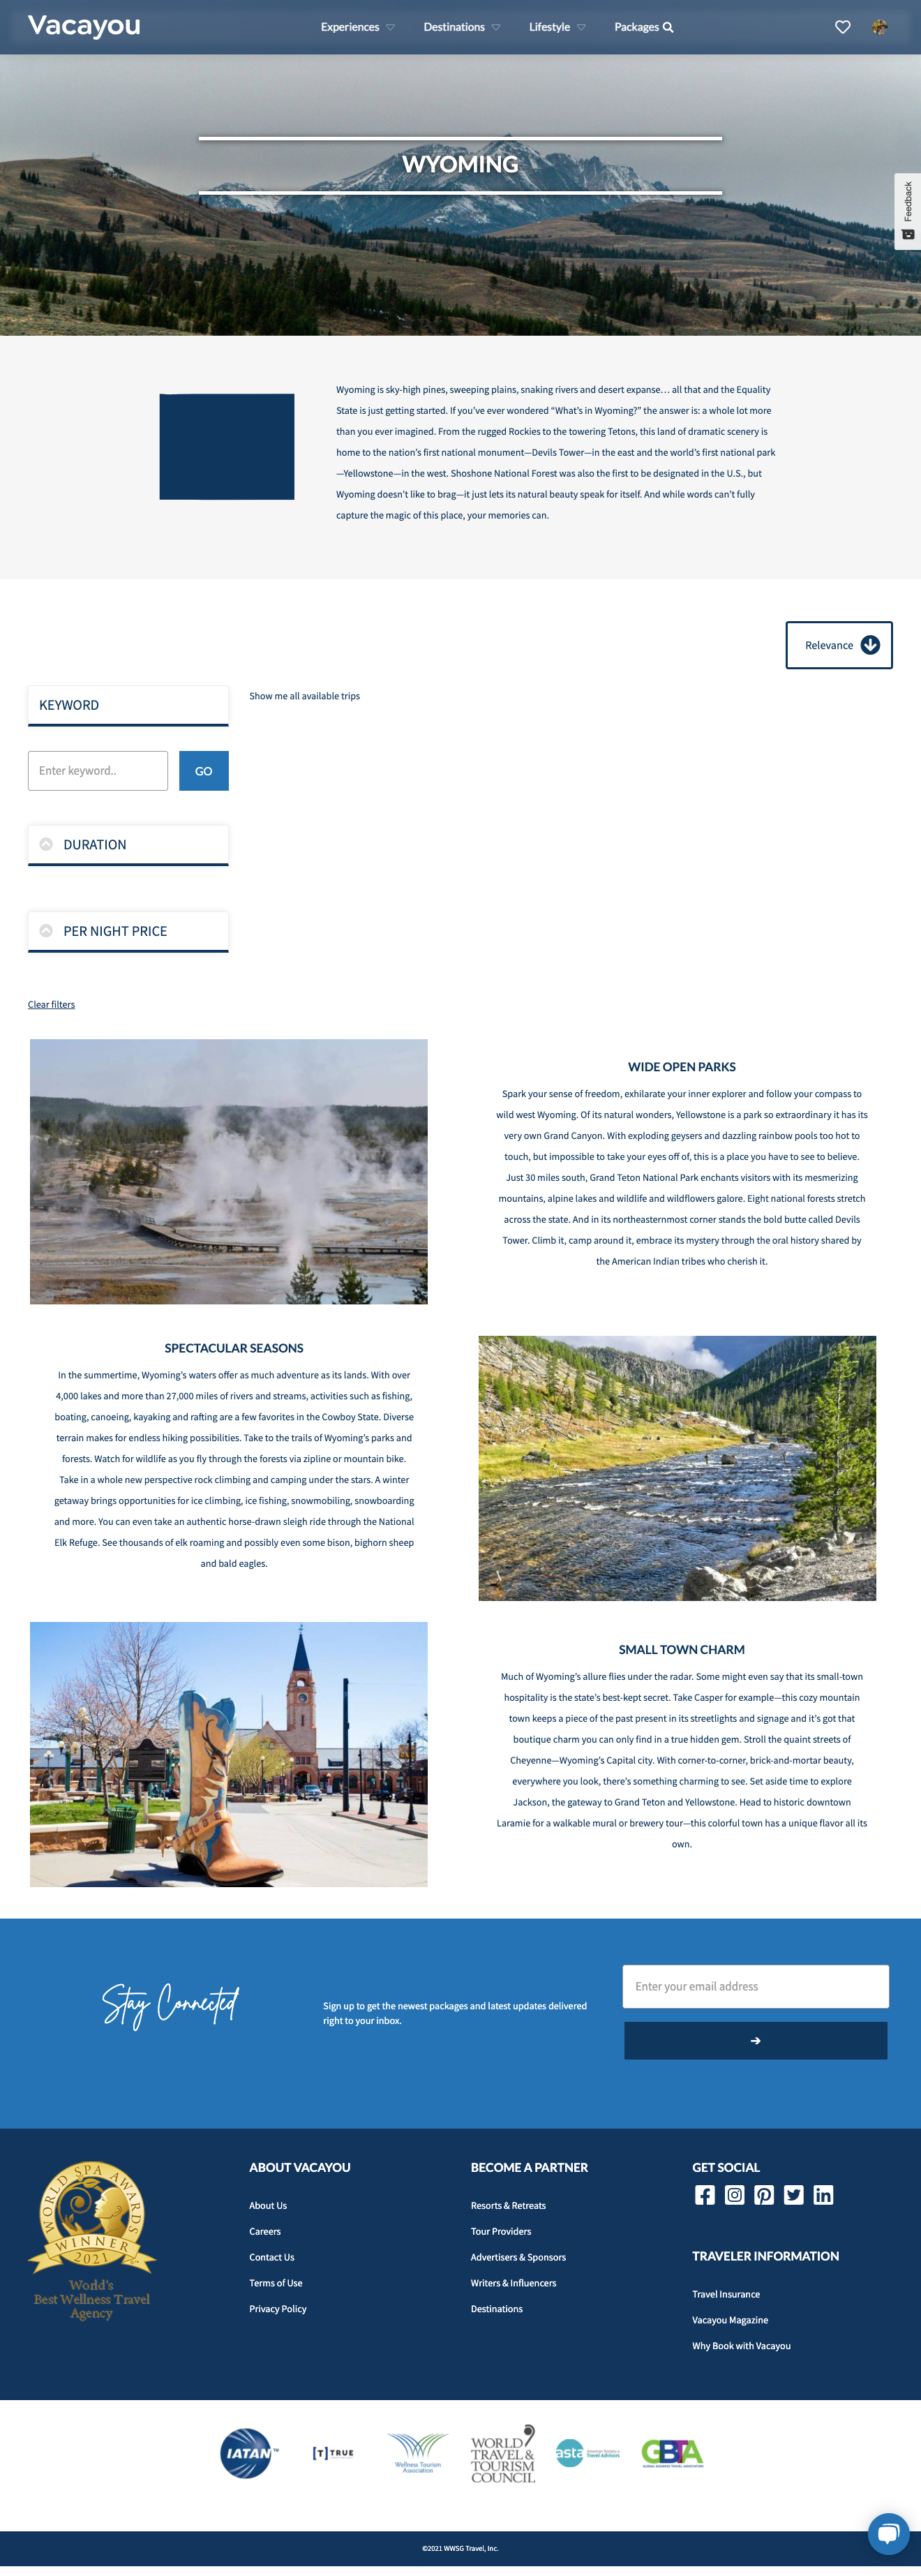 Wyoming Destination Page